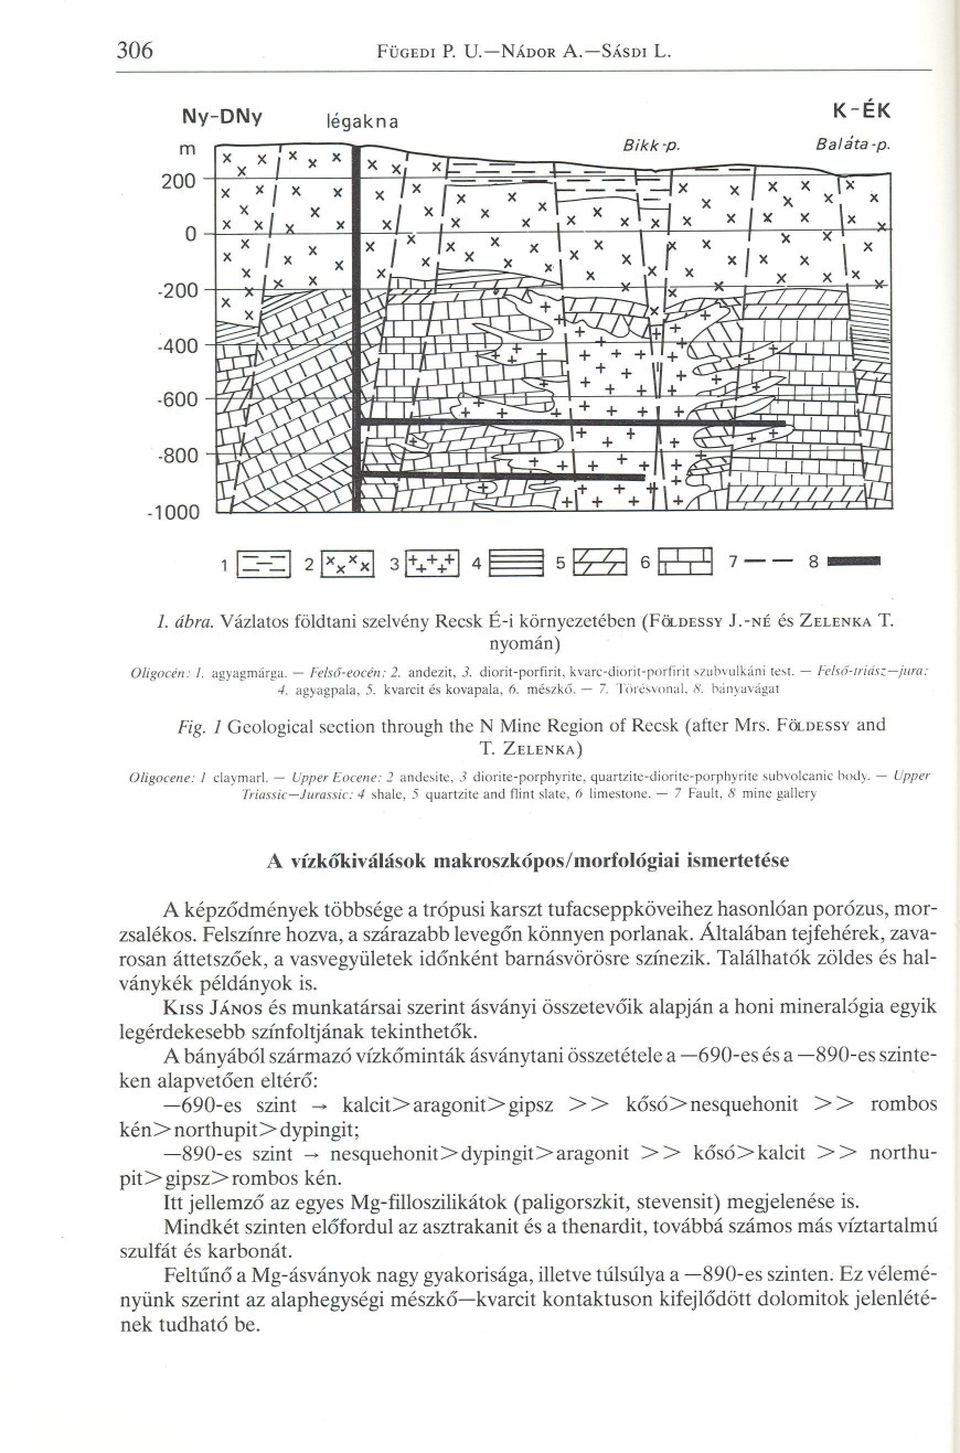 mészko. - 7. TÖrésvonal. 8. oanyavágat Fig. 1 Geological section through the N Mine Region of Recsk (after Mrs. FÖLDESSYand T. ZELENKA) Oligocene: 1 claymarl.